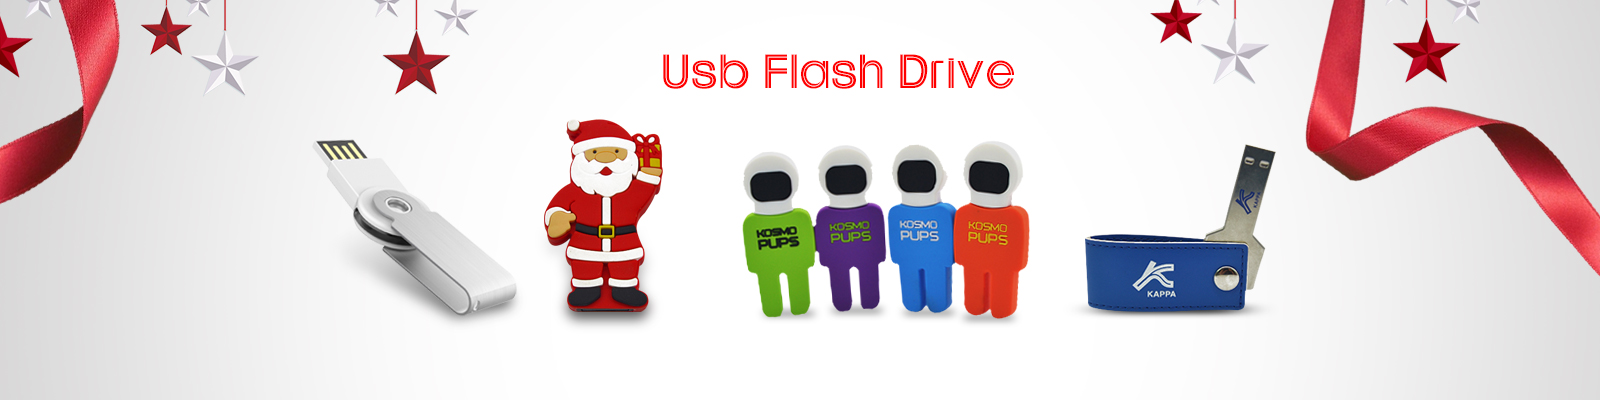 Swivel usb flash drive | Bulk usb drives | Usb storage | leadway group limited